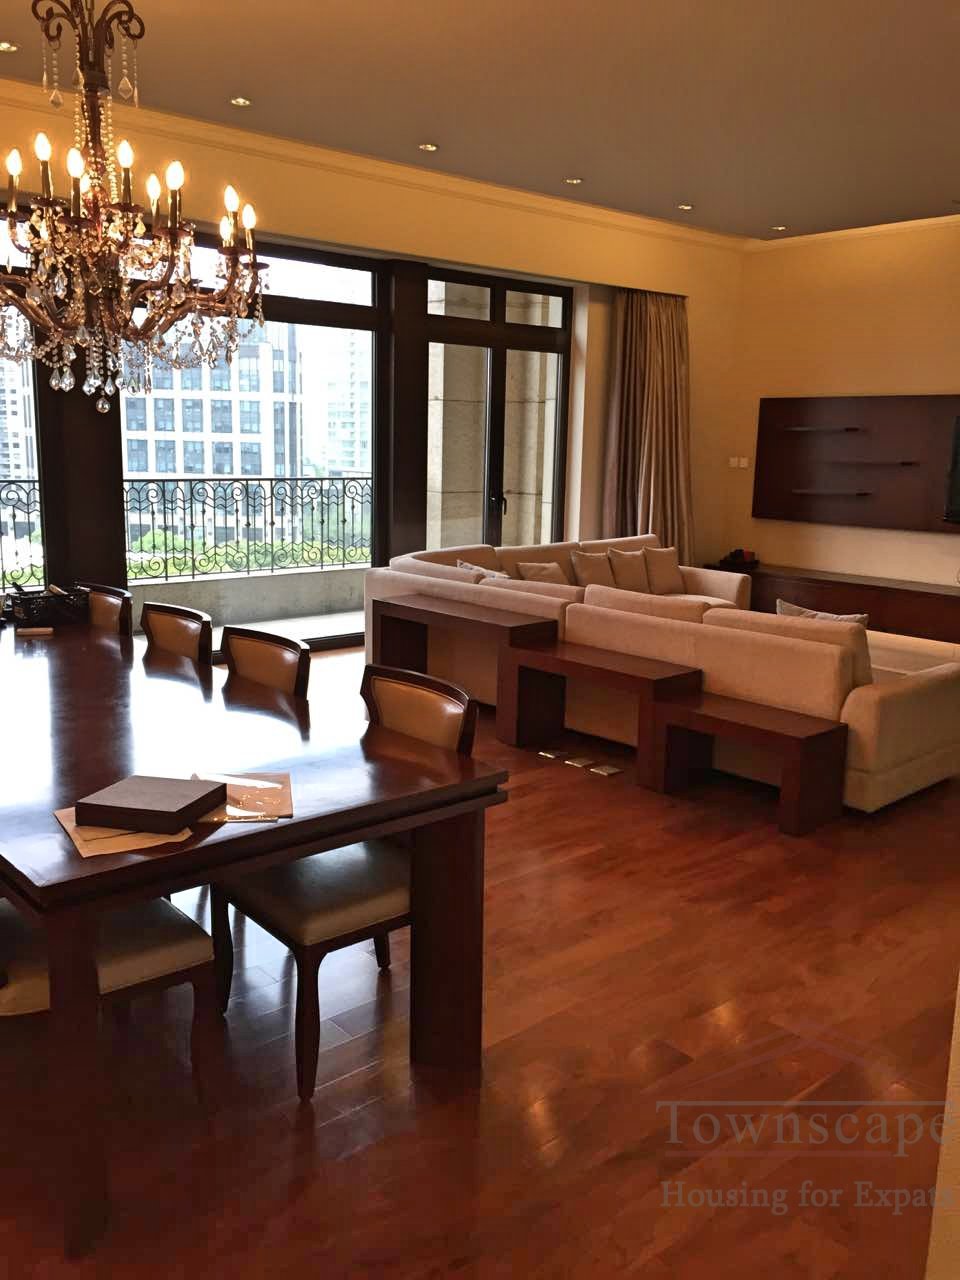 Shanghai luxury rentals Prestigious split-level triplex w/ 5BR in Lakeville Regency